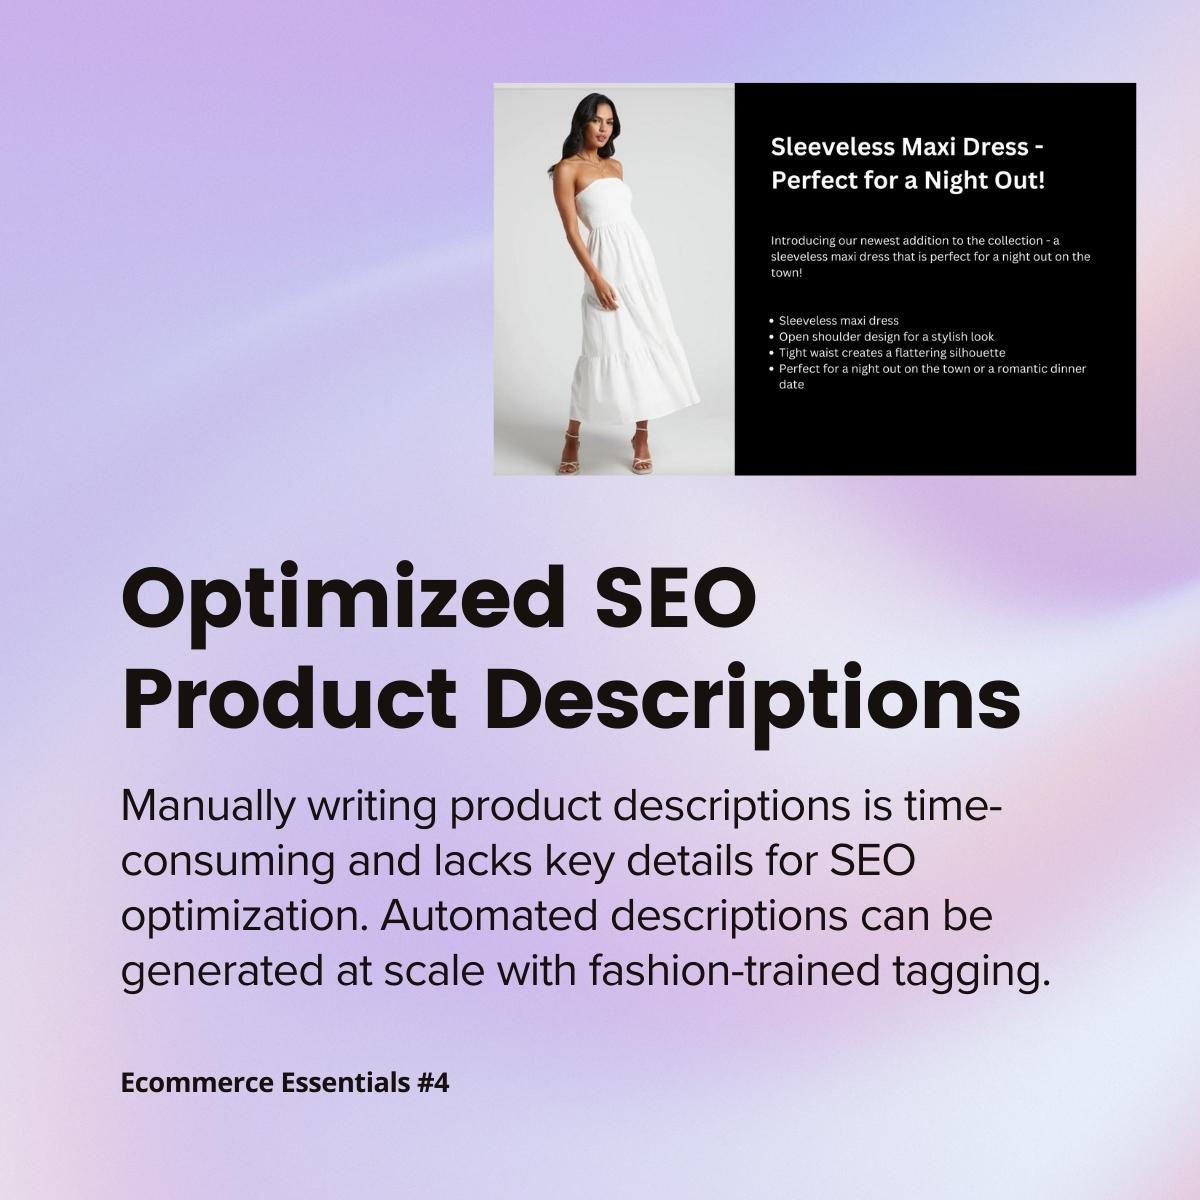 Optimized SEO product descriptions are ecommerce essentials against a gradient background